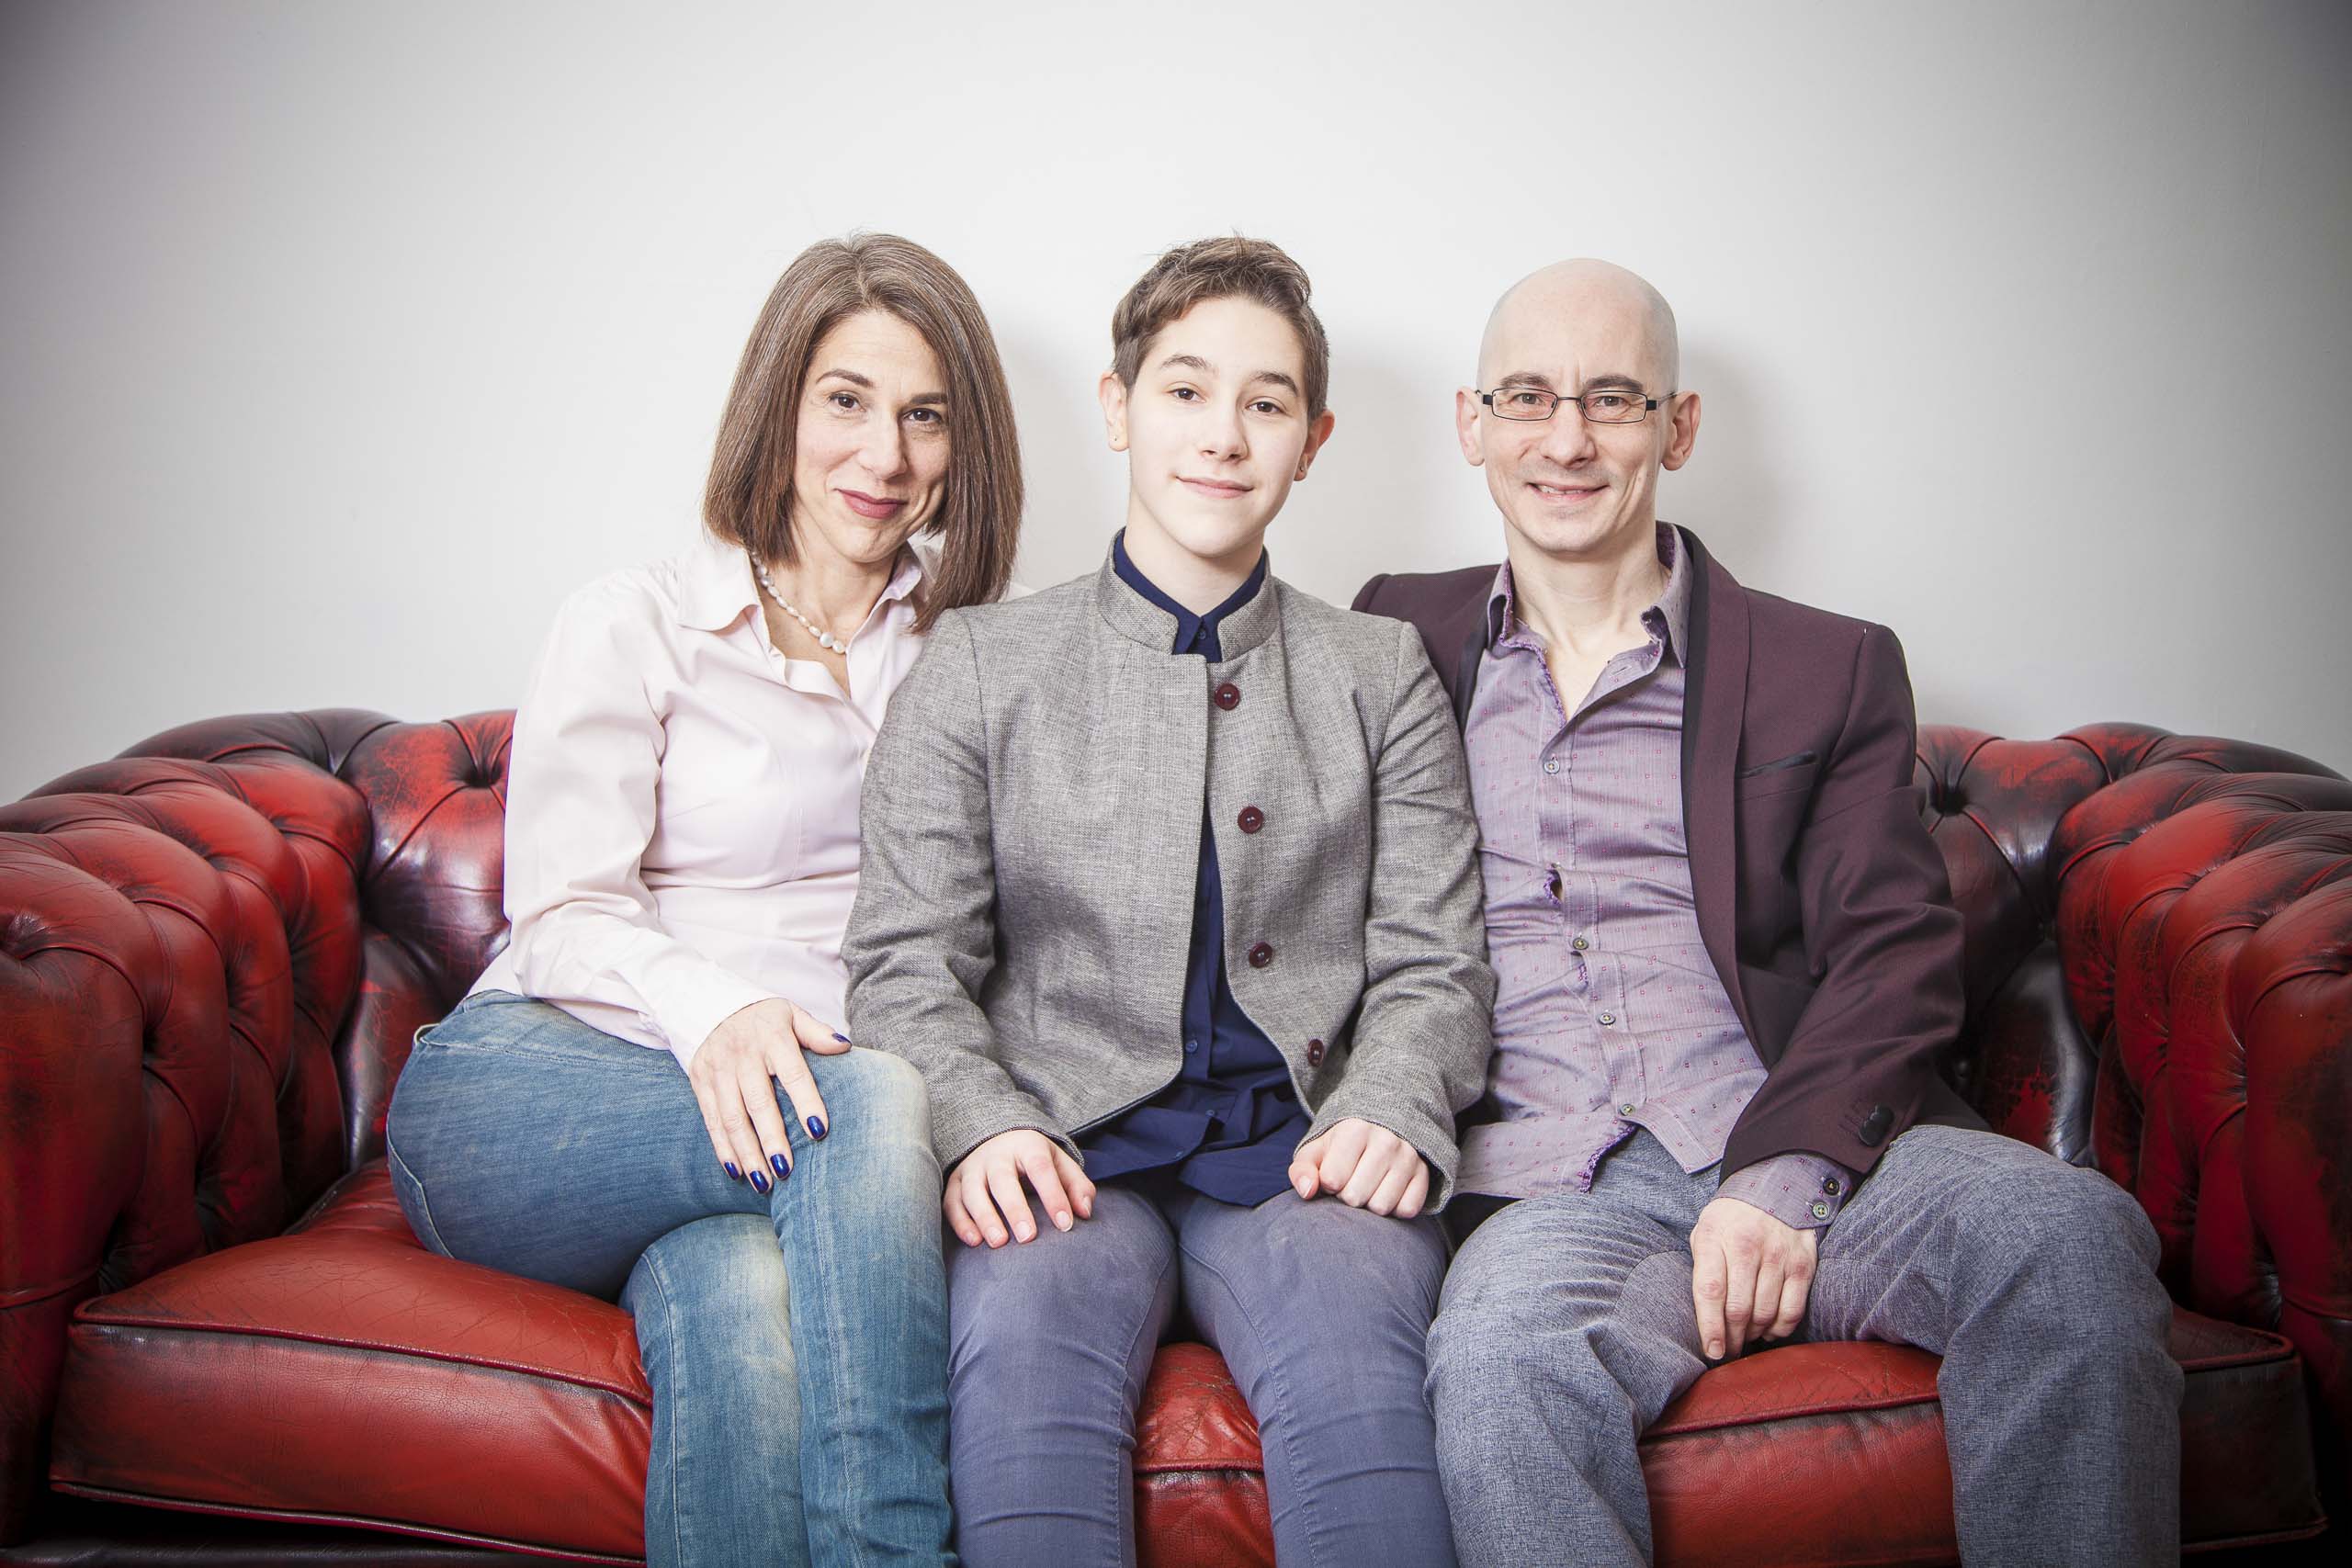 Dr Sasha Mitrofanov and his family